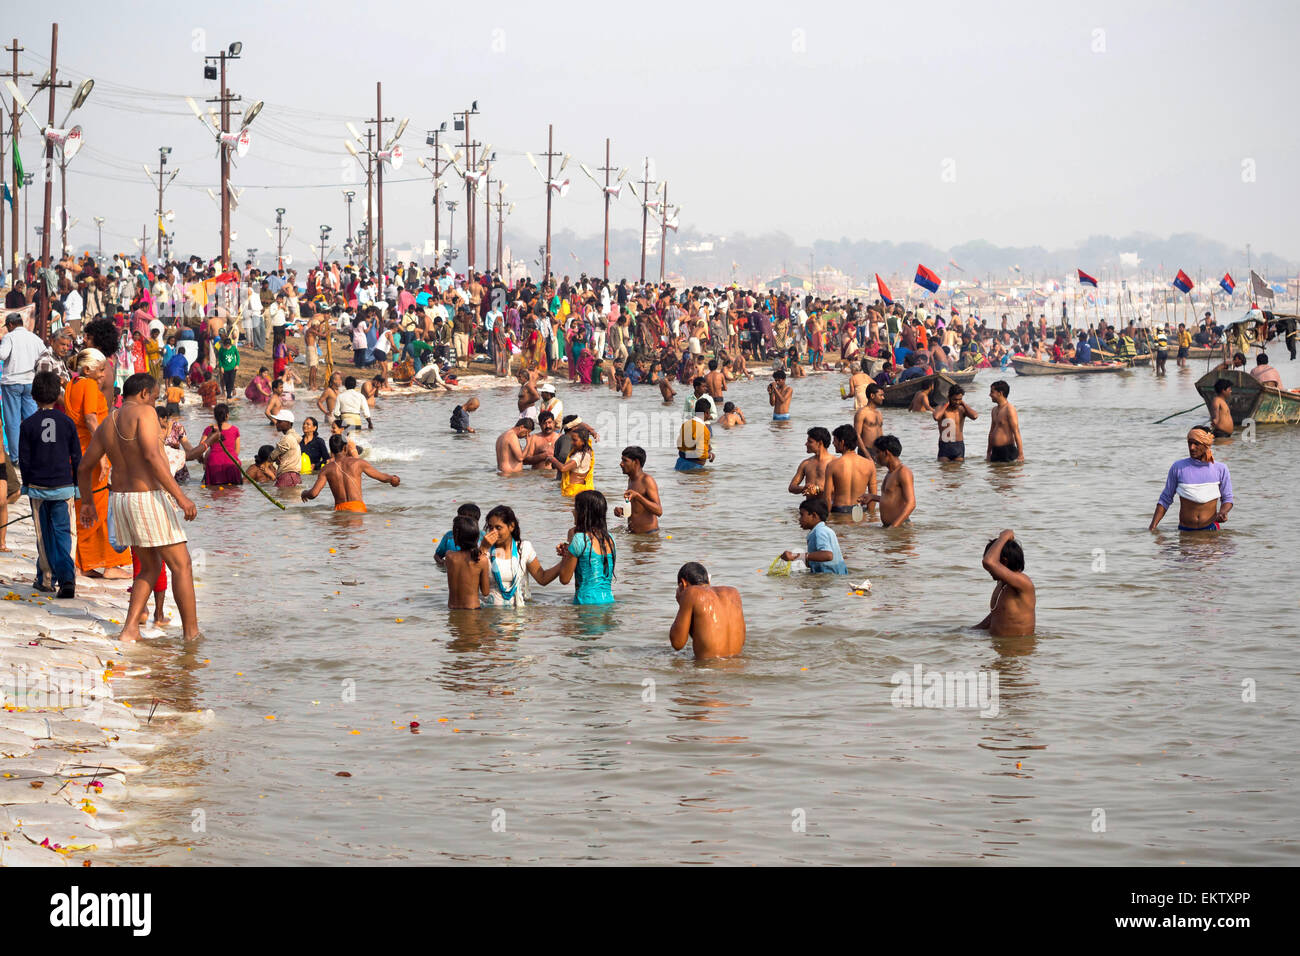 Hindu pilgrims bathing in the Triveni Sangam, the intersection of Yamuna and Ganges rivers, at Kumbh Mela in Allahabad, India. Stock Photo